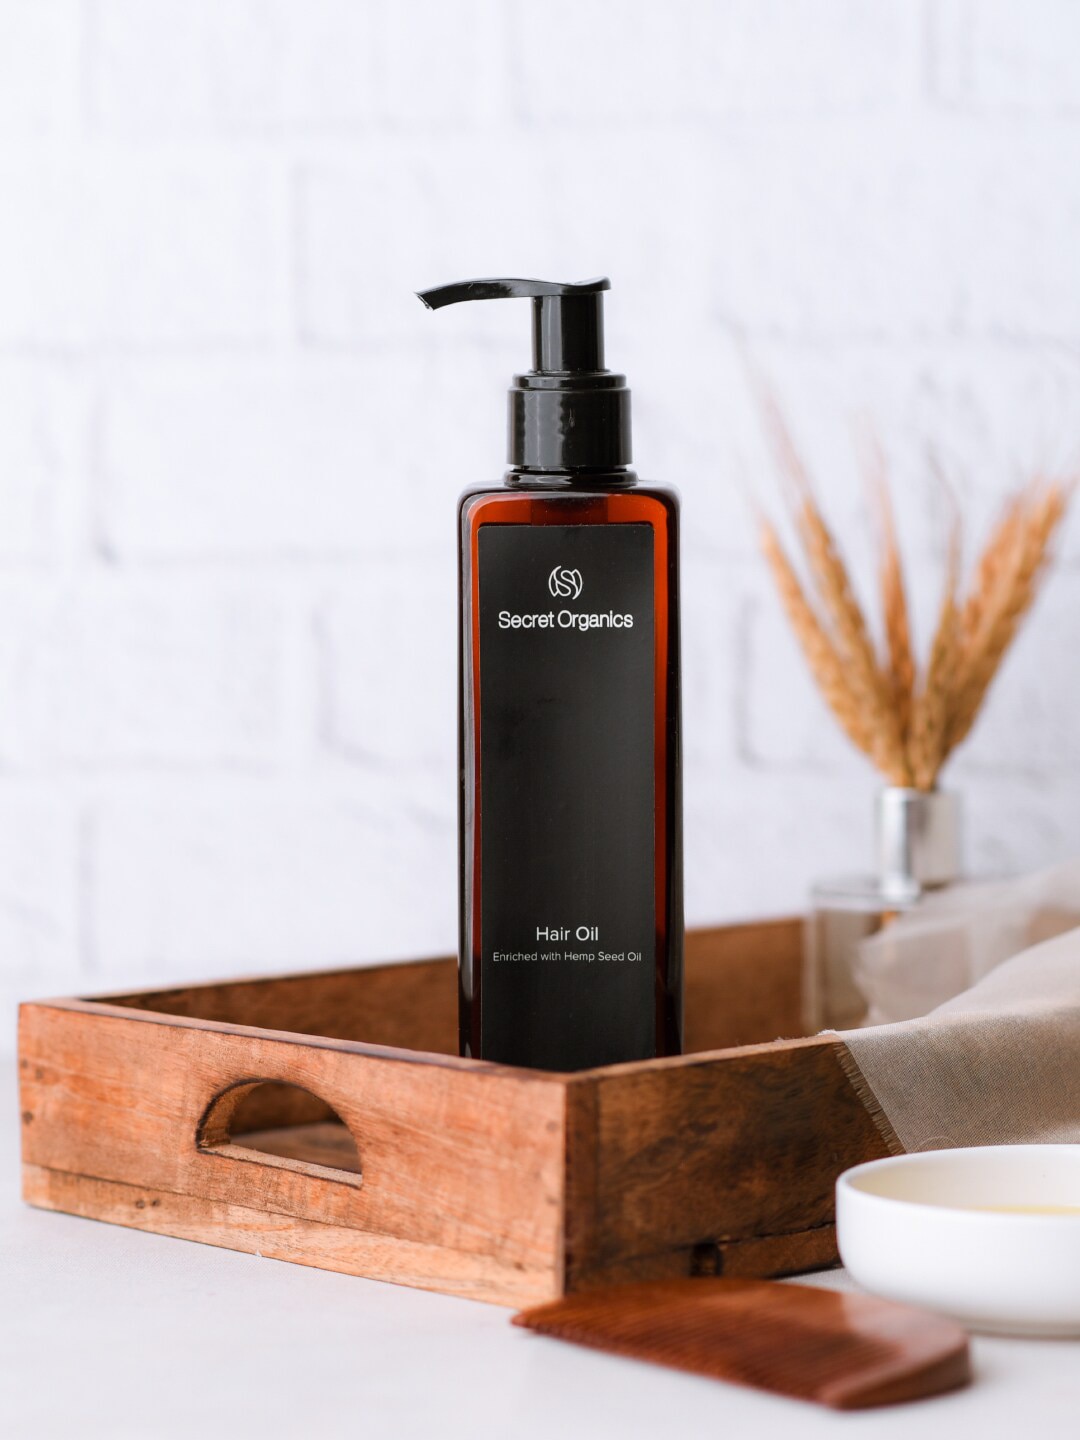 Secret Organics Hair Oil with Hemp Seed Oil - 200 ml Price in India